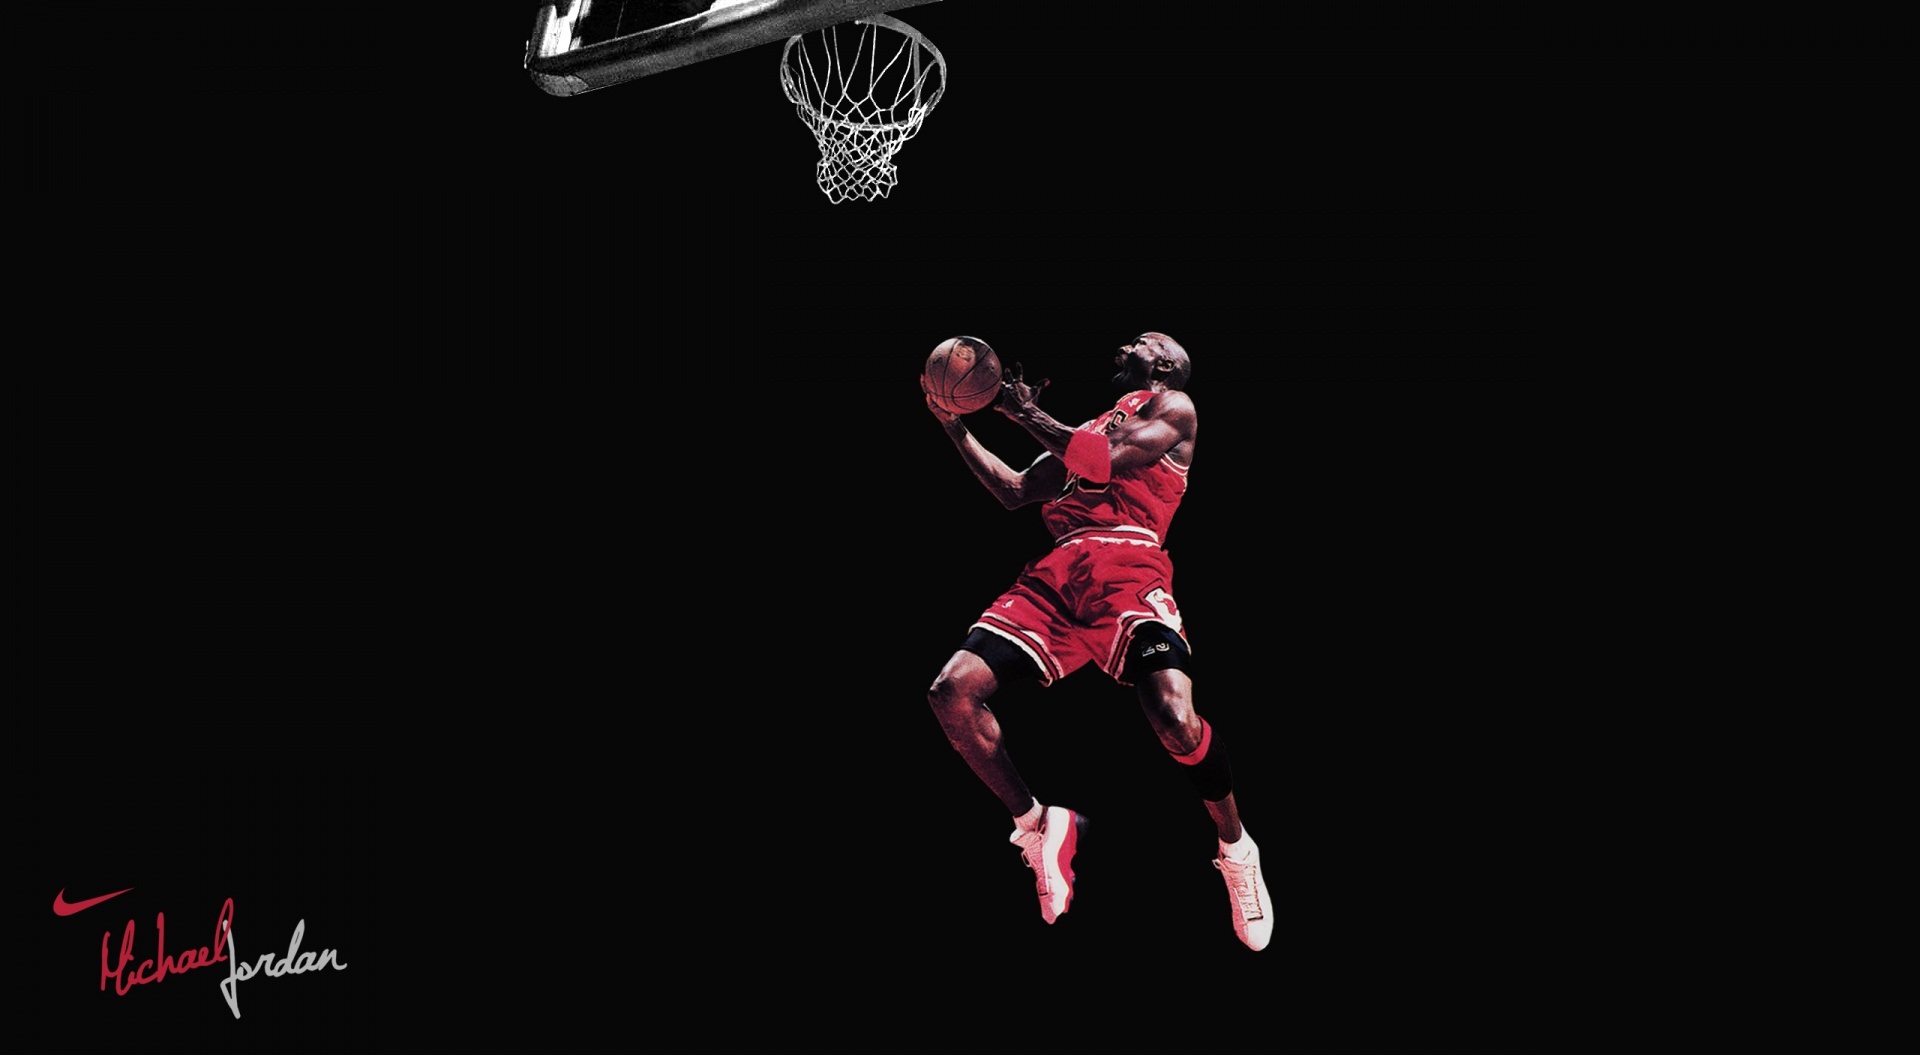 Michael Jordan Wallpaper Black Background Photos